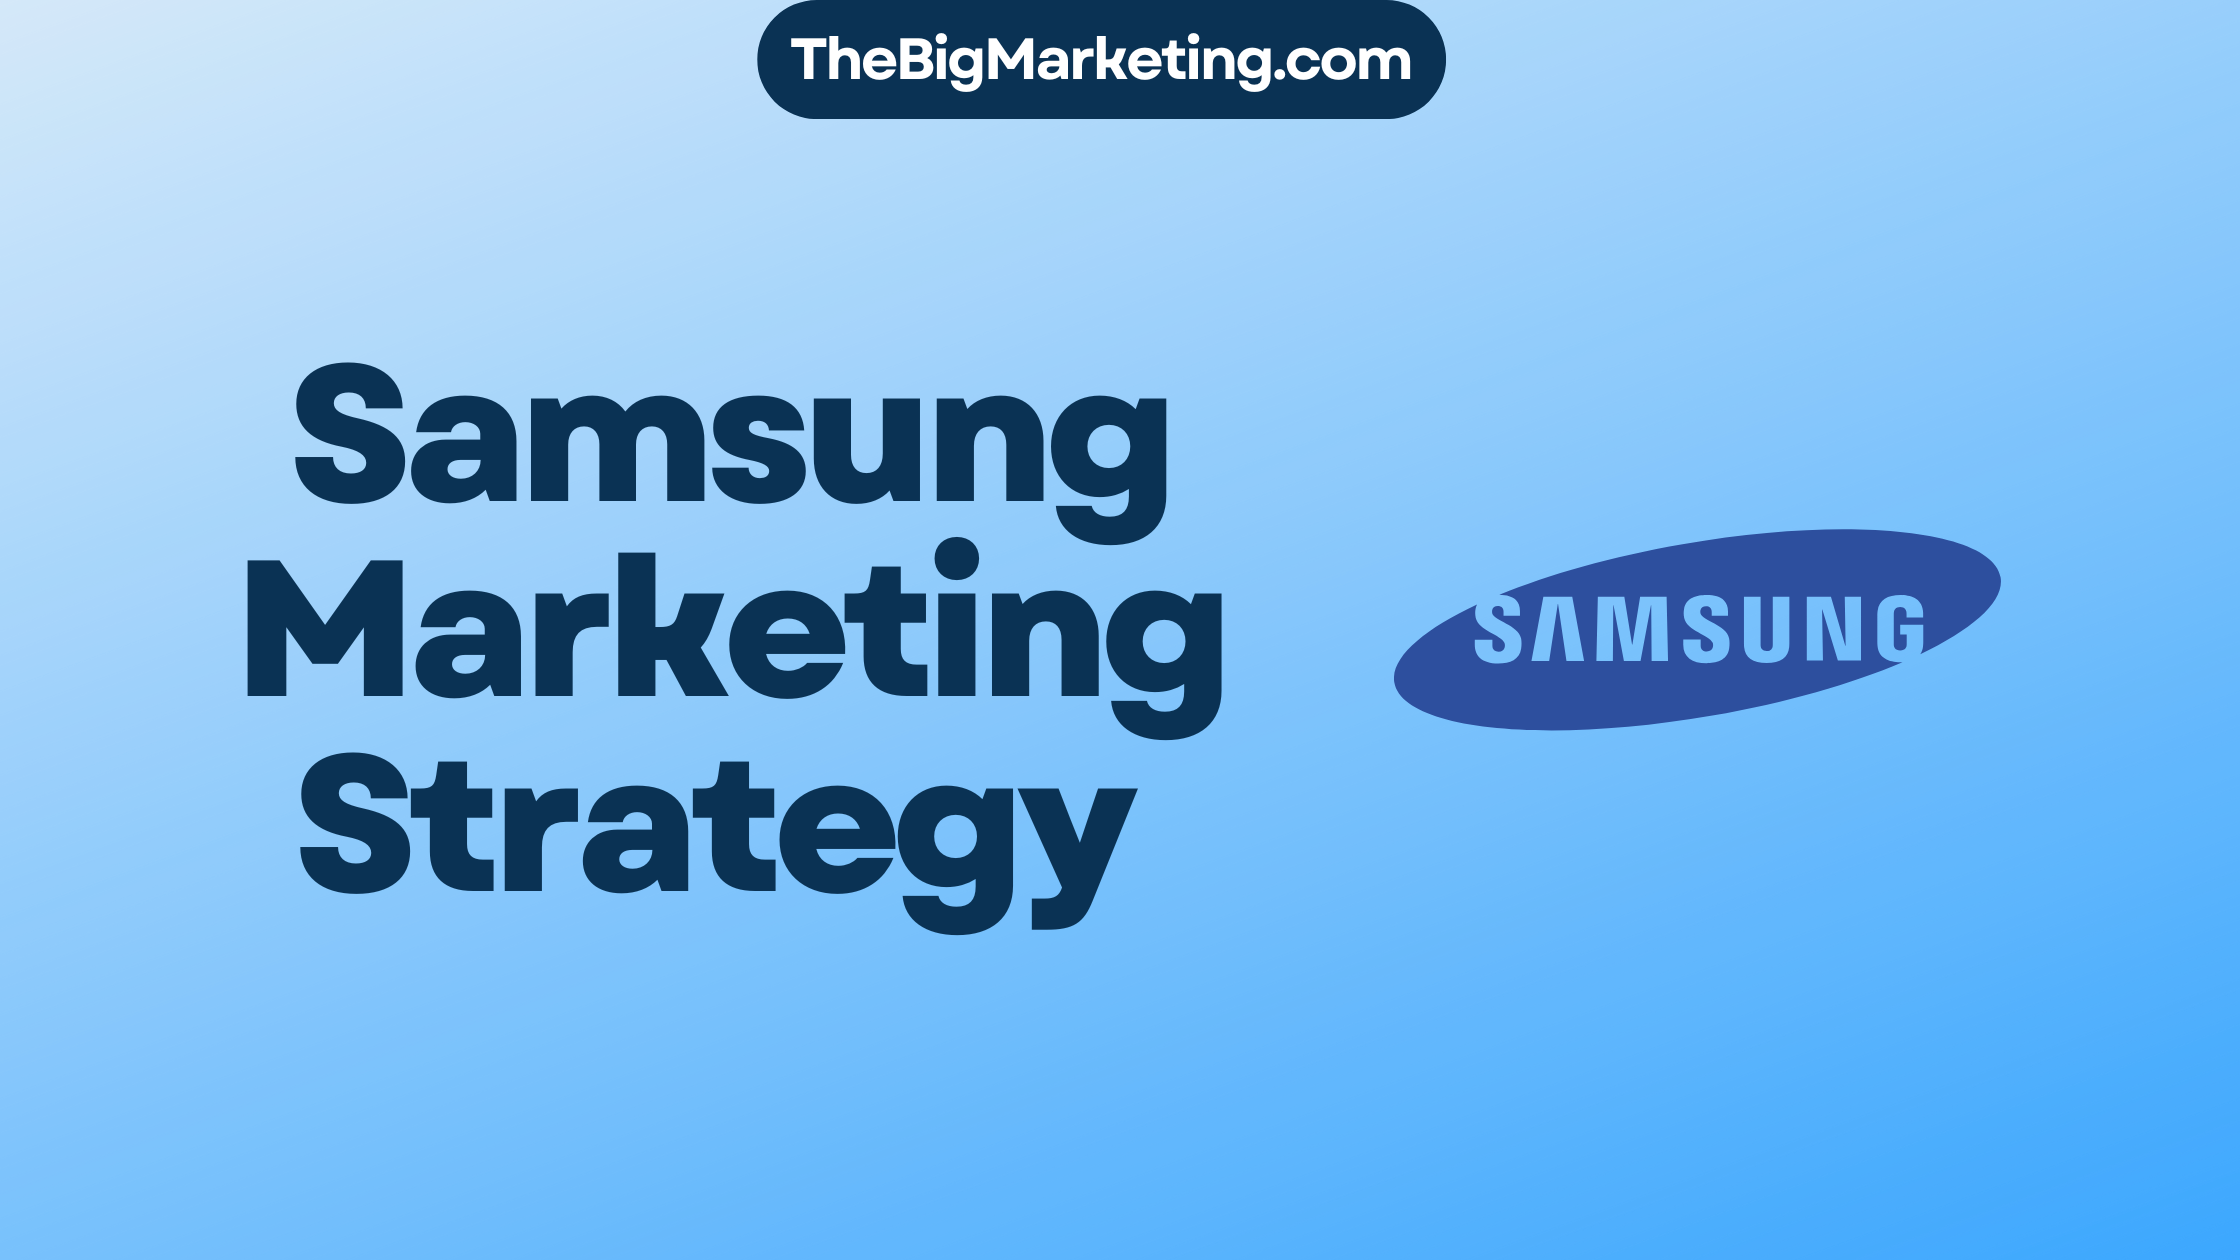 Samsung Marketing Strategy